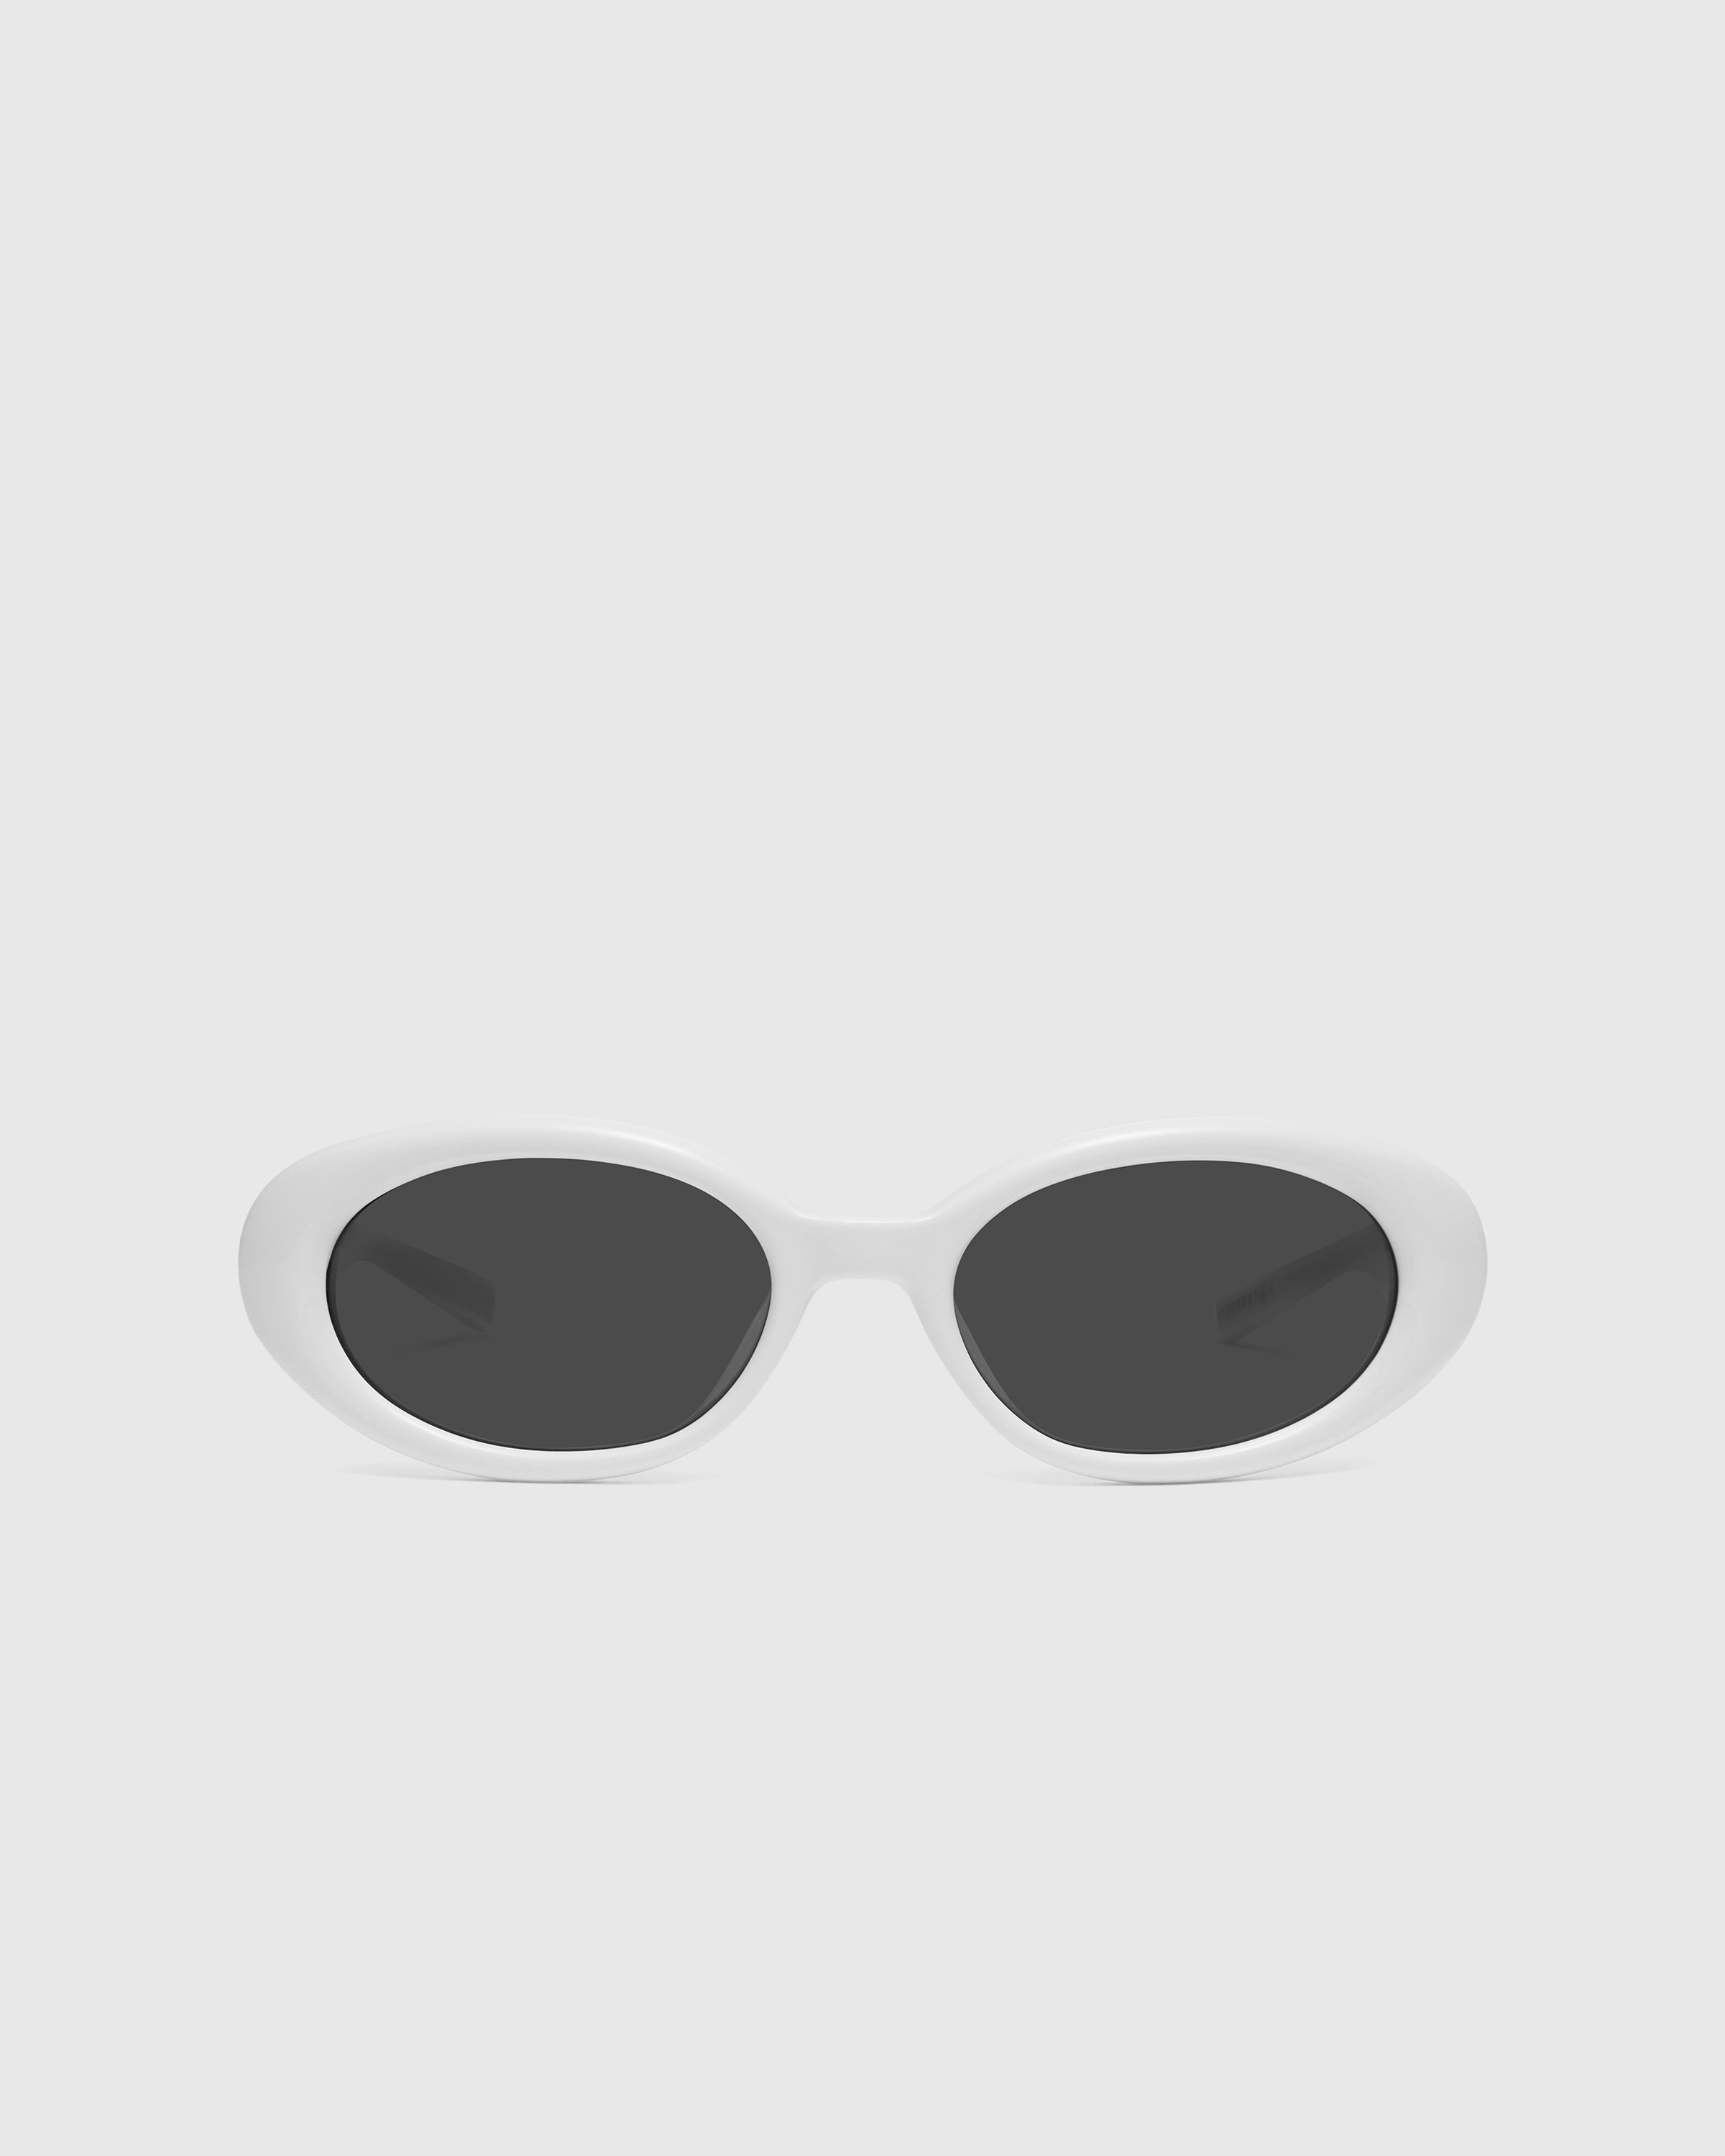 Maison Margiela x Gentle Monster - Sunglasses MM107-W2 - Accessories - White - Image 1